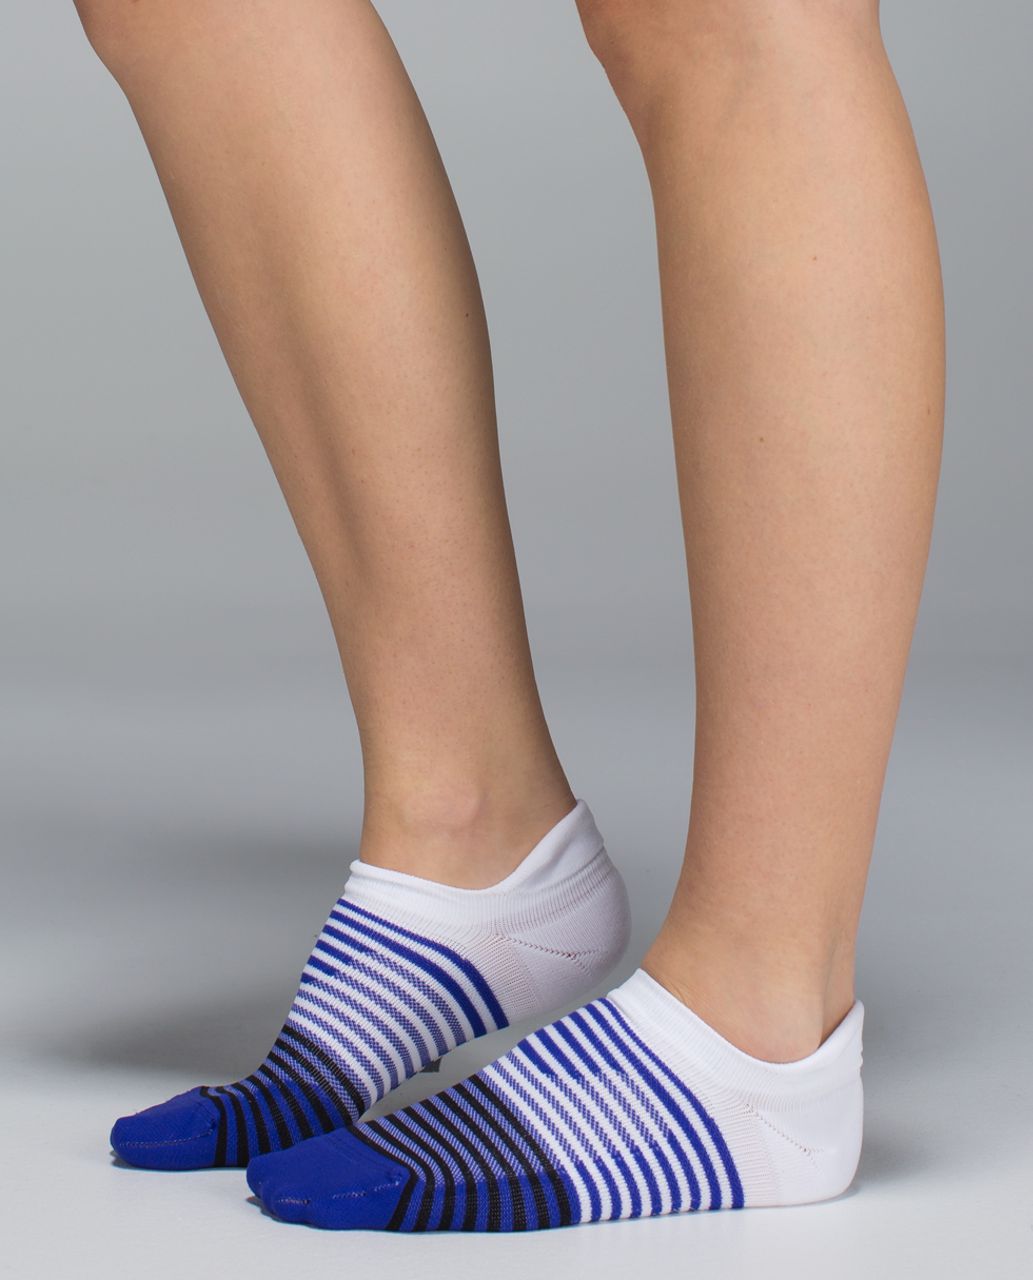 Lululemon Women's Ultimate No Show Run Sock *Ergo Toes - 4x4 Stripe Pigment Blue White